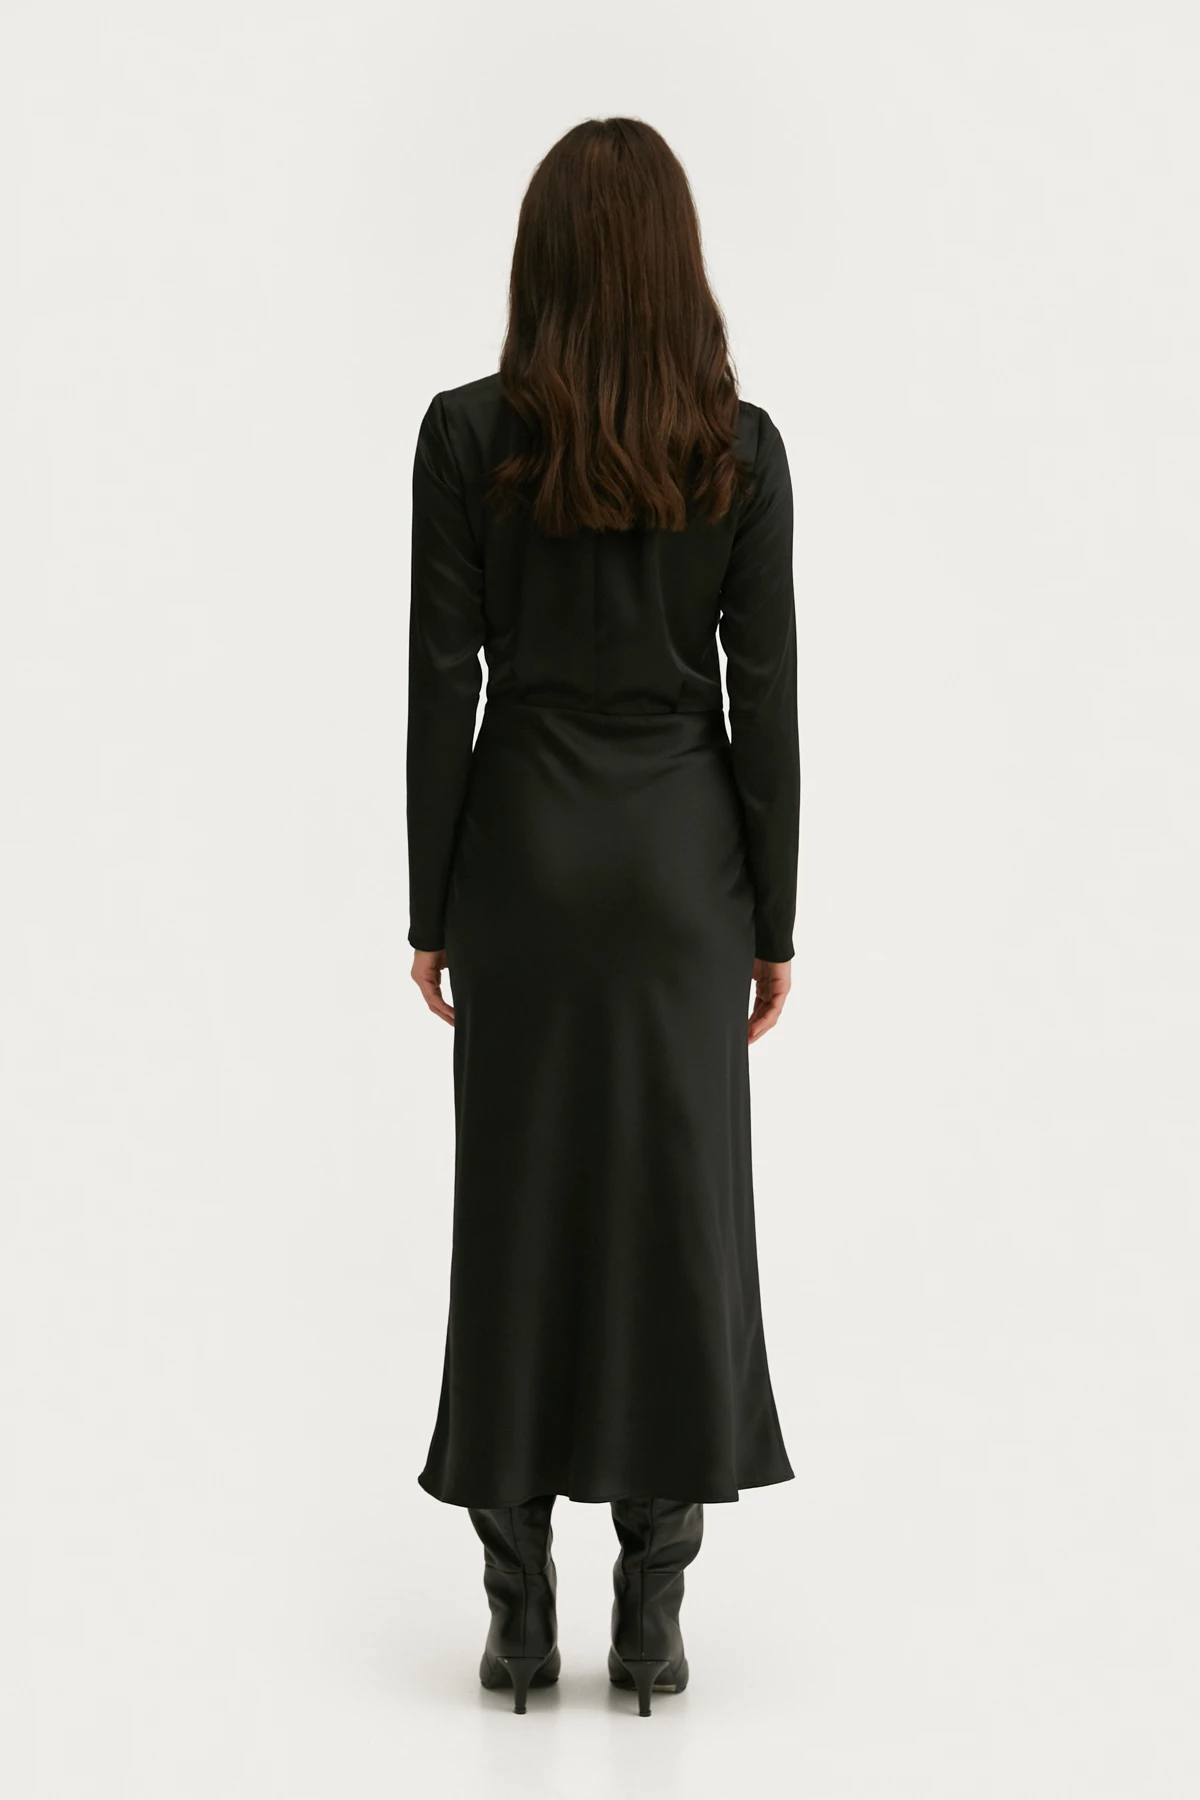 Satin black dress with sleeves, photo 4